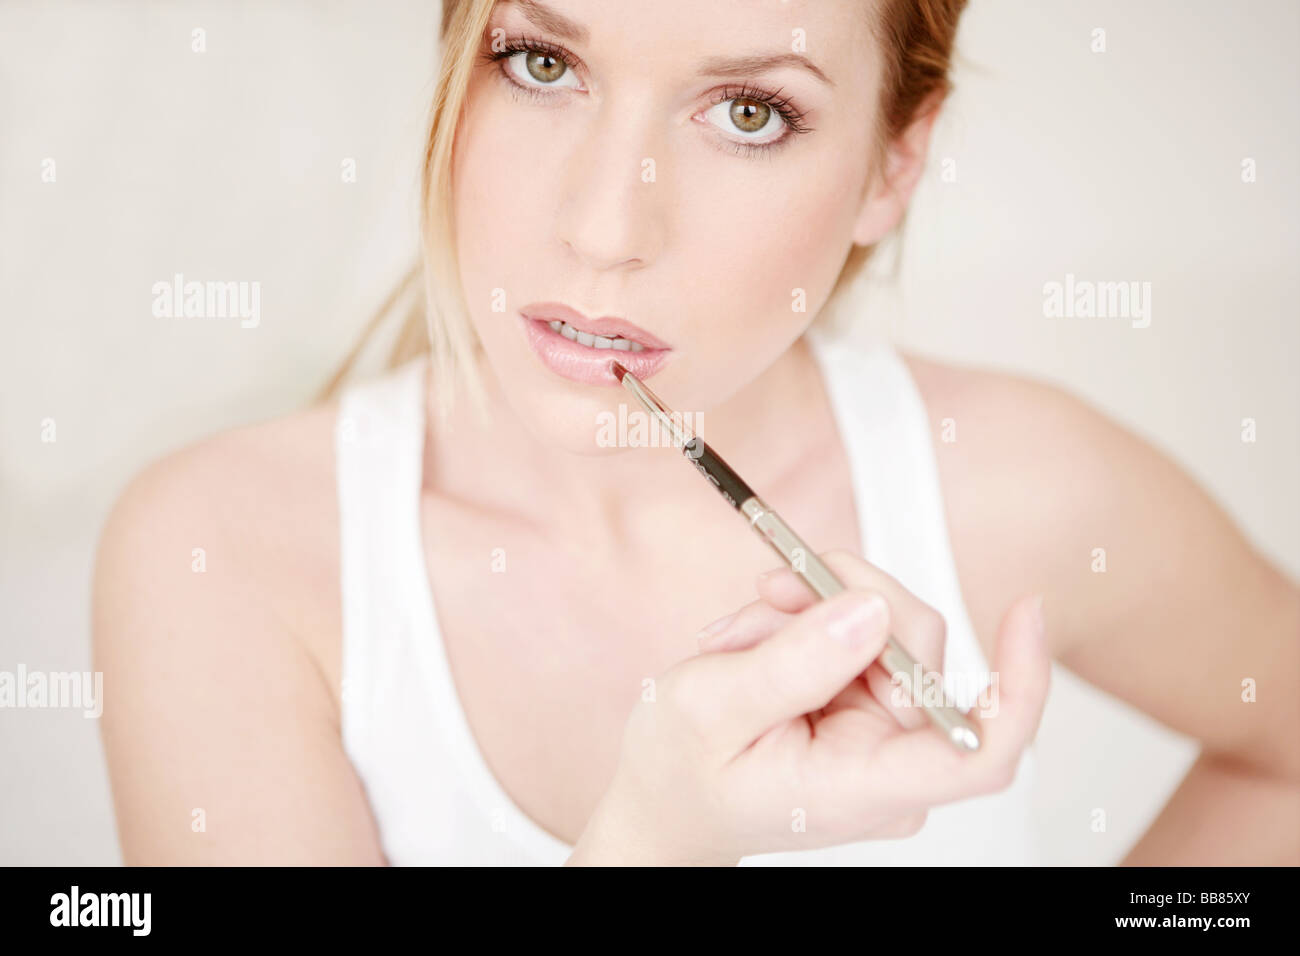 Portait of young beauty woman applying lip gloss on lips Stock Photo